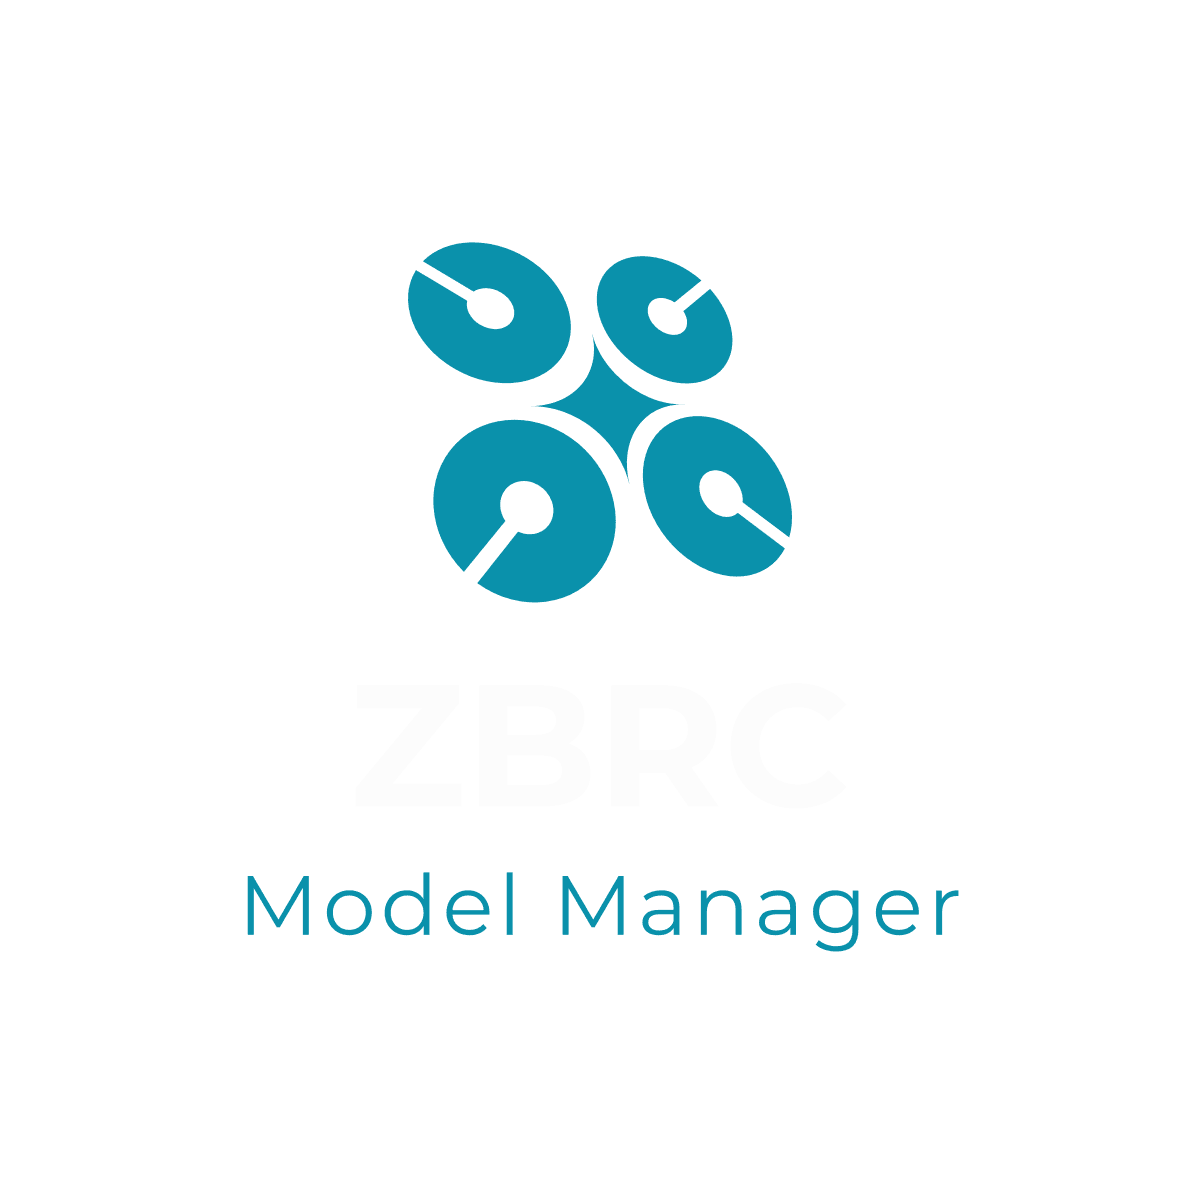 ZBRC Model Manager